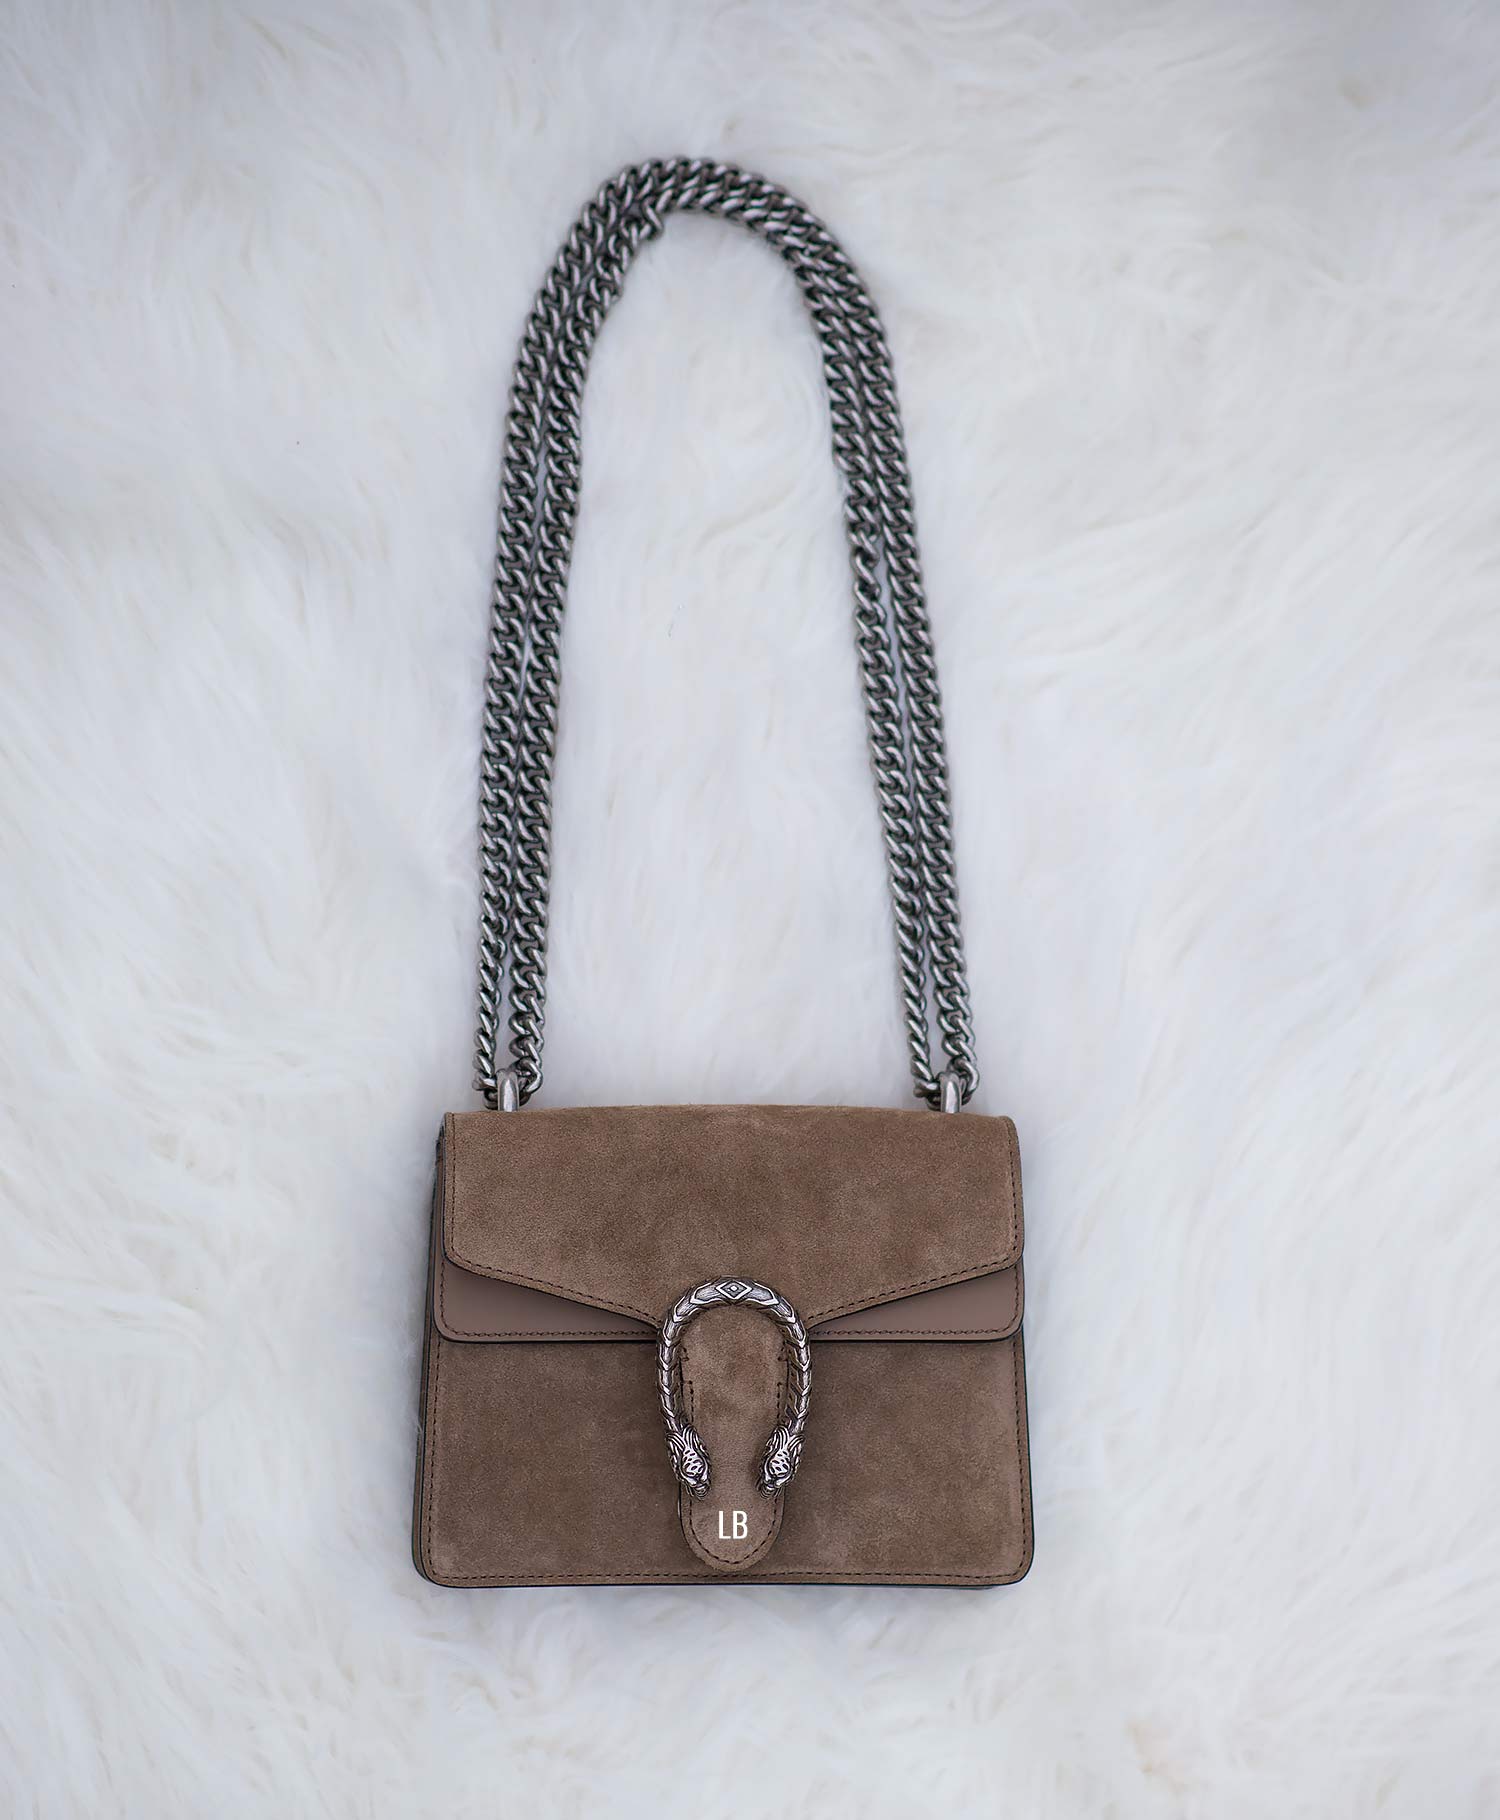 Gucci Dionysus Mini Suede Shoulder Bag Review | Raindrops of Sapphire